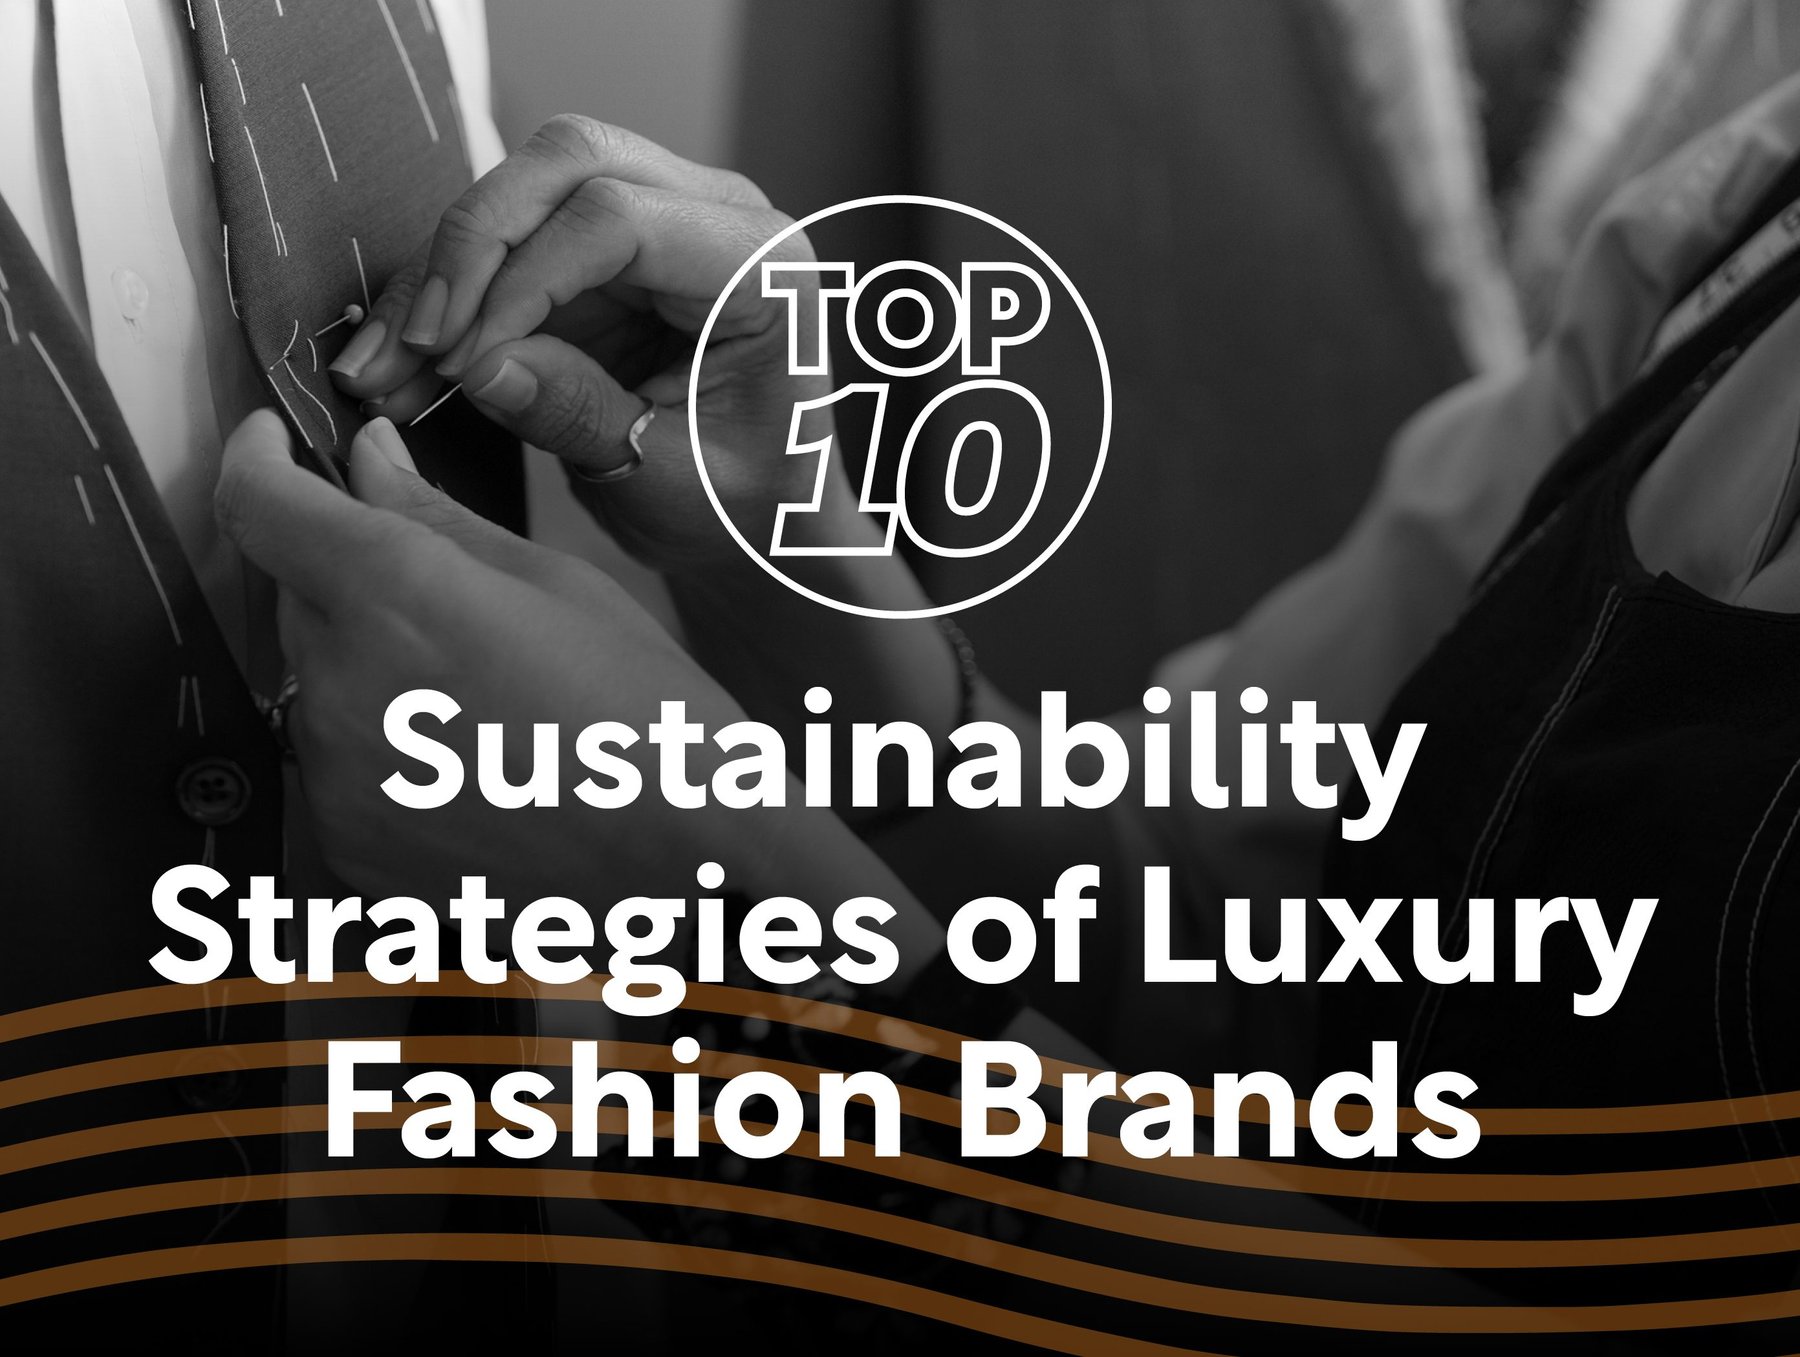 https://assets.bizclikmedia.net/1800/4bf0d6b5c9f74d9b0daf56f068ee97f6:14e3749477bb88d397ae87b3a1aa6283/sustainability-top10-sustainability-strategies-of-luxury-fashion-brands.jpg